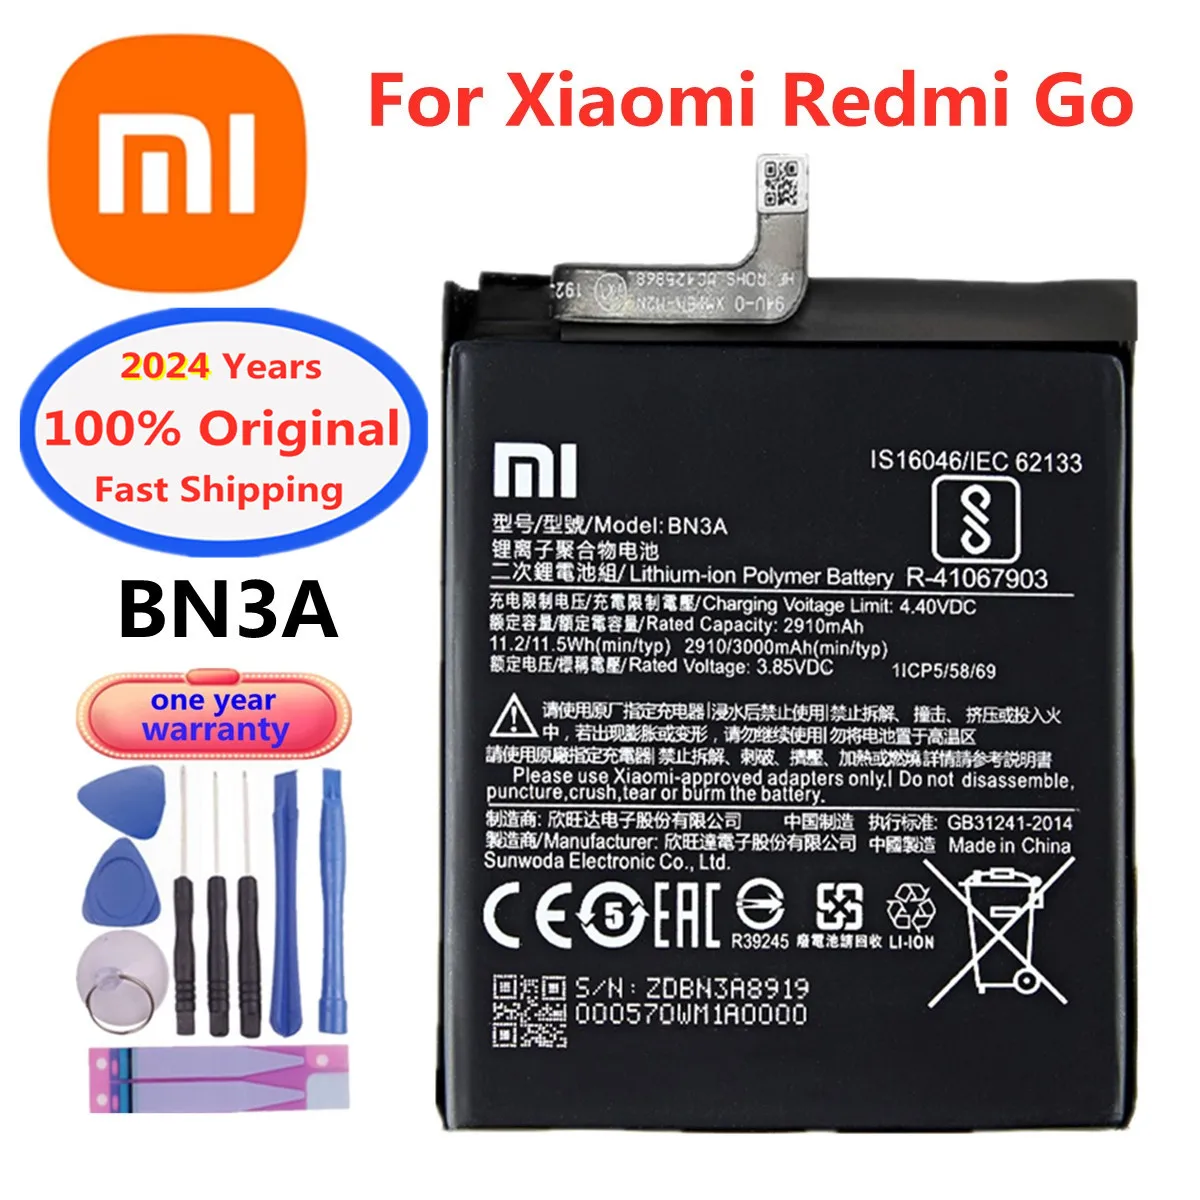 

BN3A Xiao mi оригинальный сменный аккумулятор 2024 года для Xiaomi Redmi Go Redmi Hongmi RedmiGo 3000 мАч аккумулятор для телефона